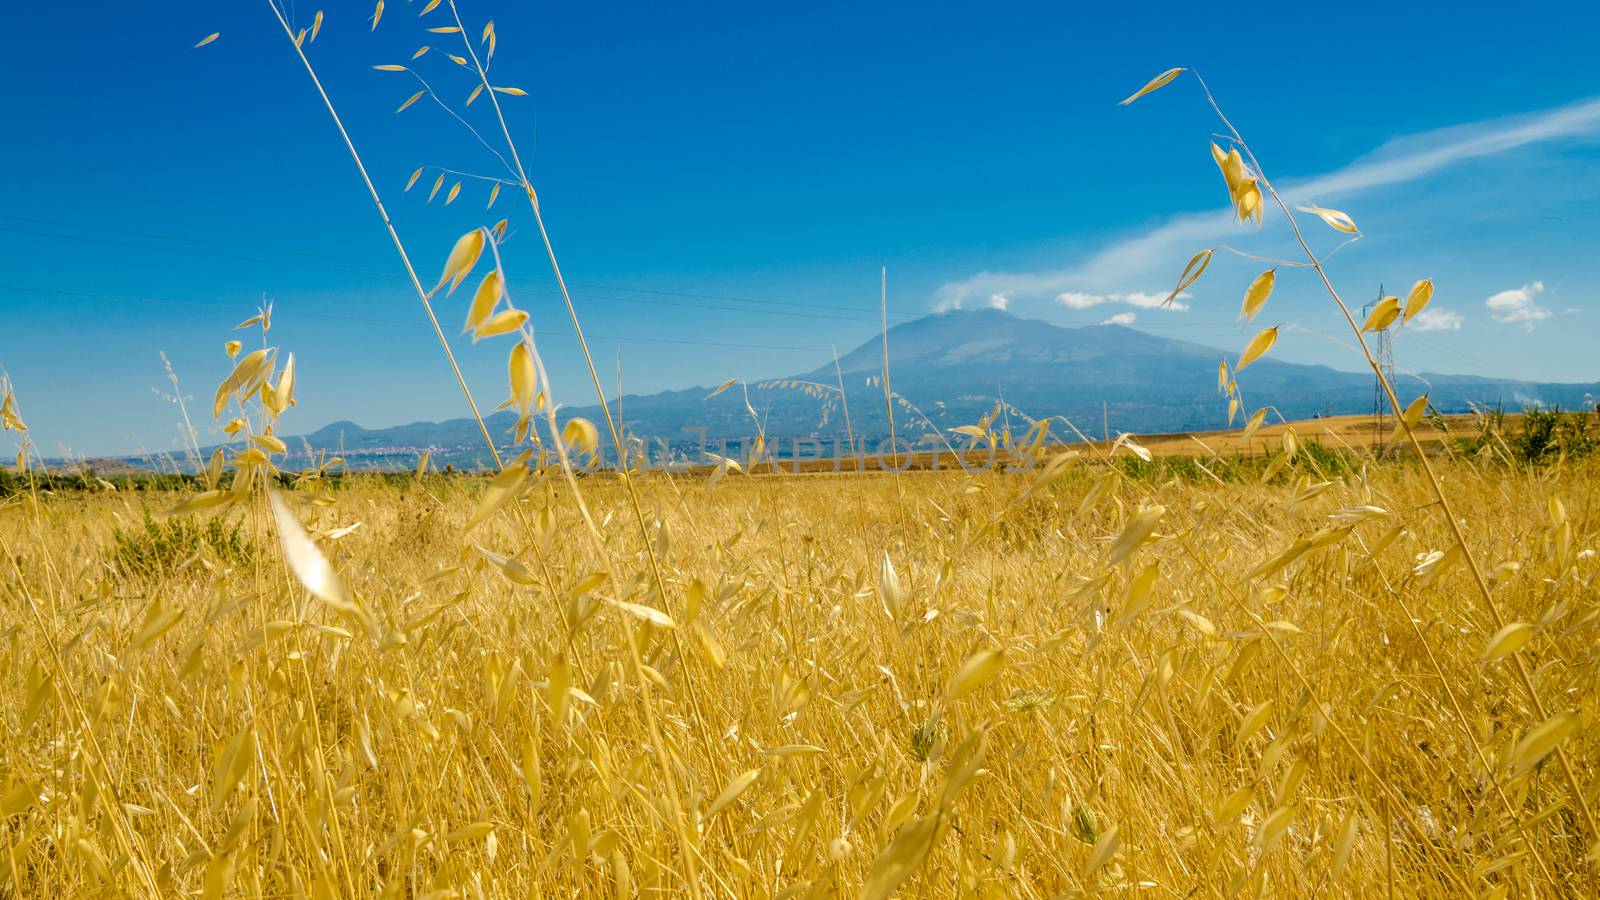 the wheat field by alanstix64